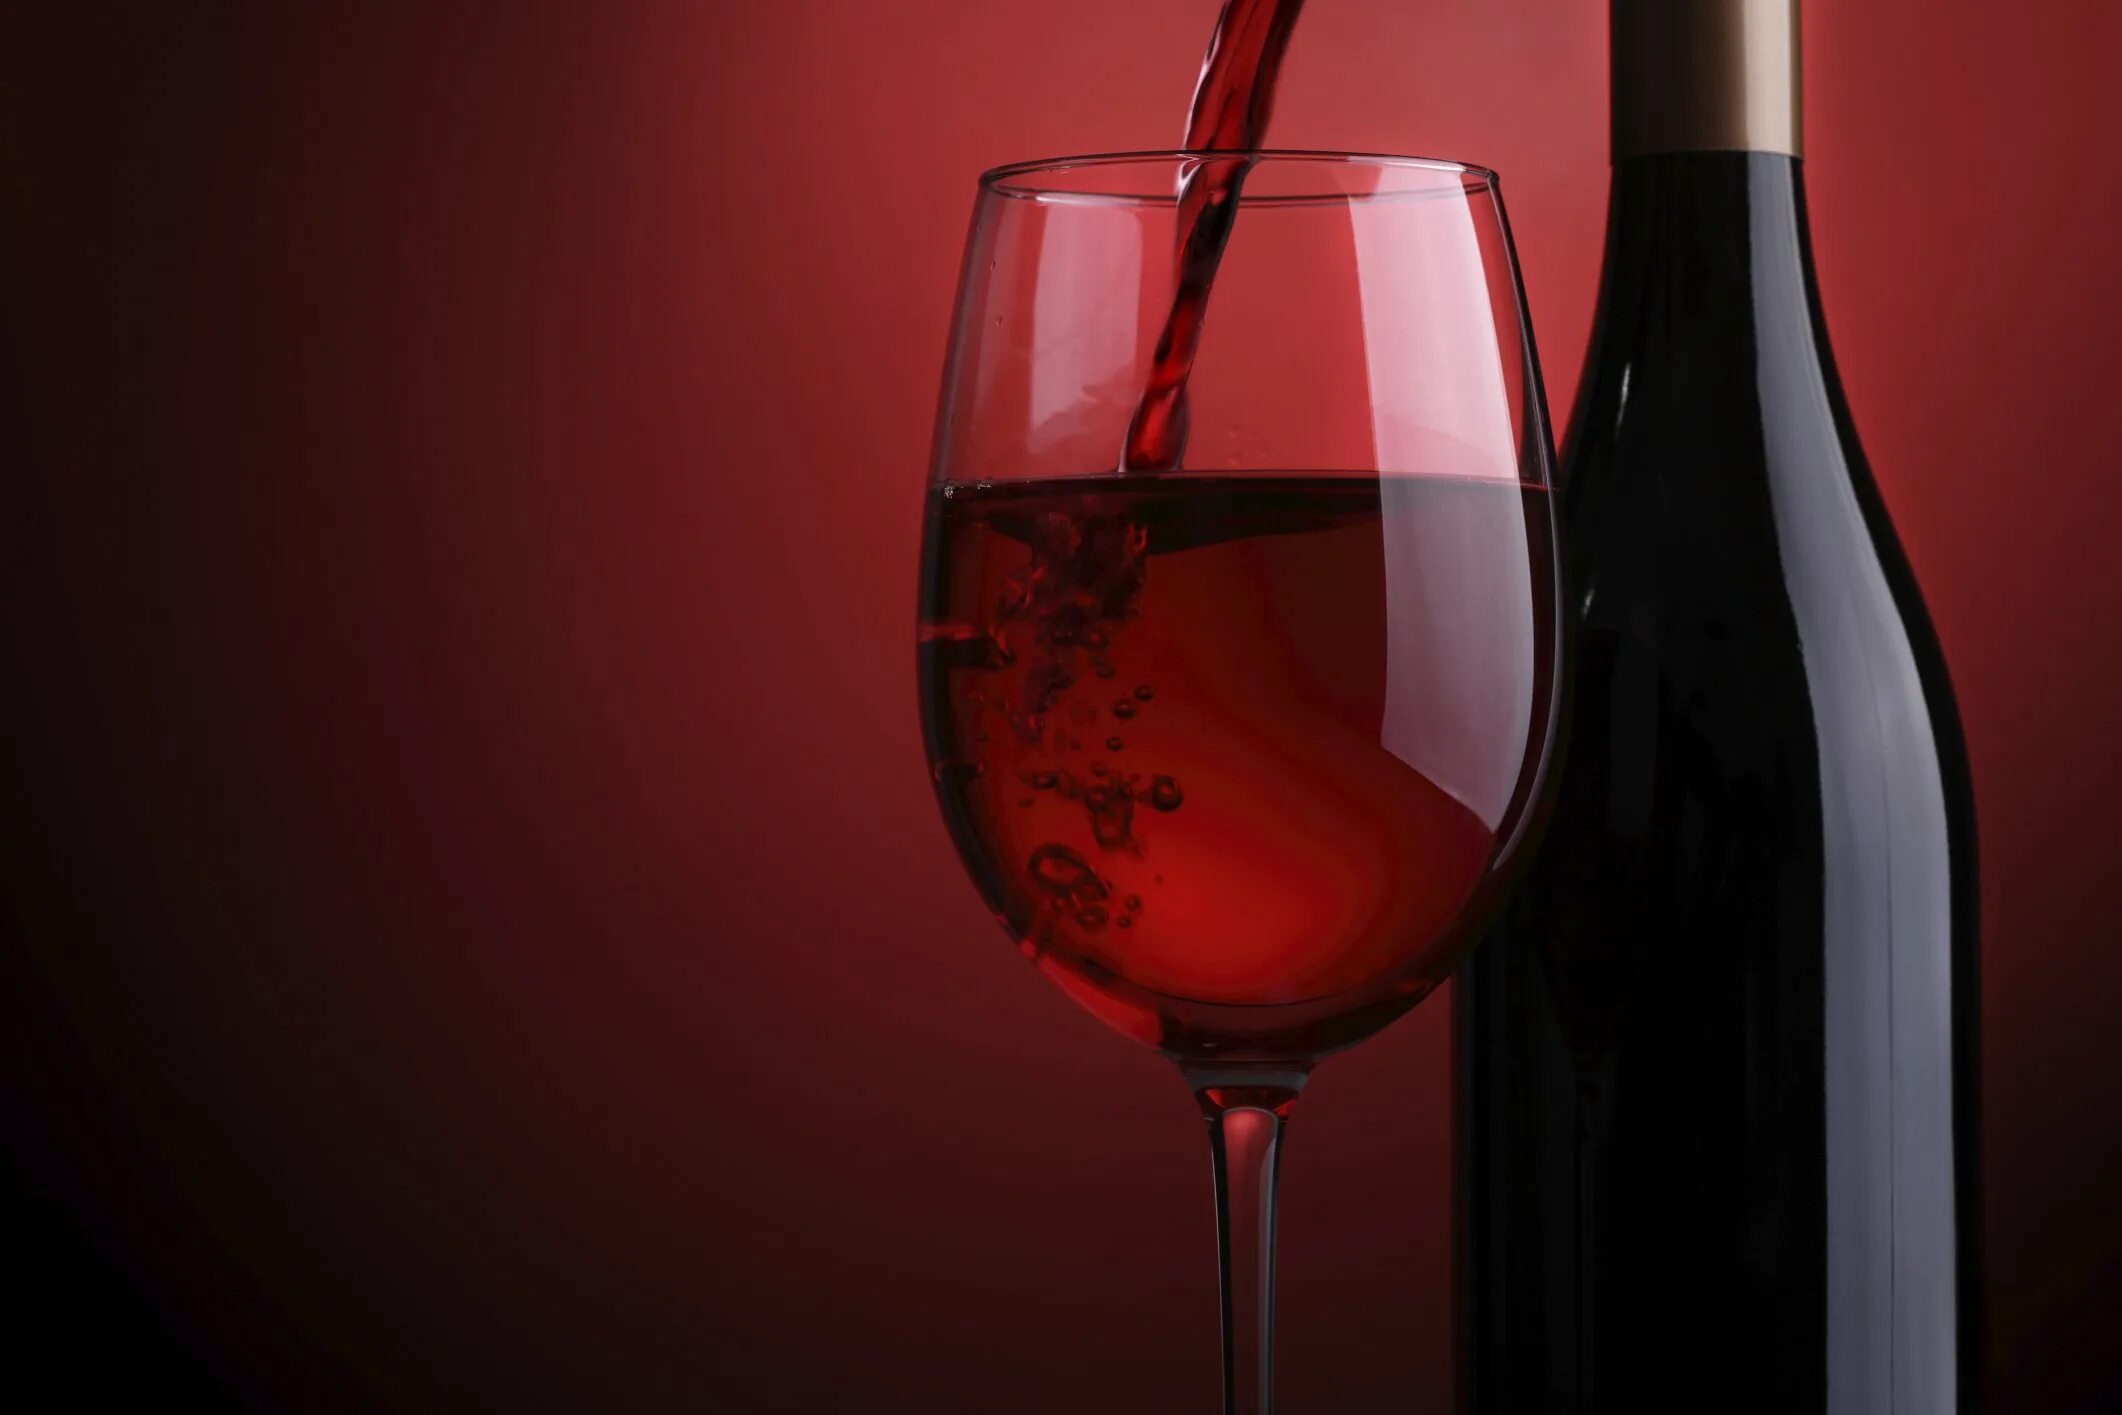 Картинку вине. Красное вино. Красивая бутылка вина. Бокал с вином.